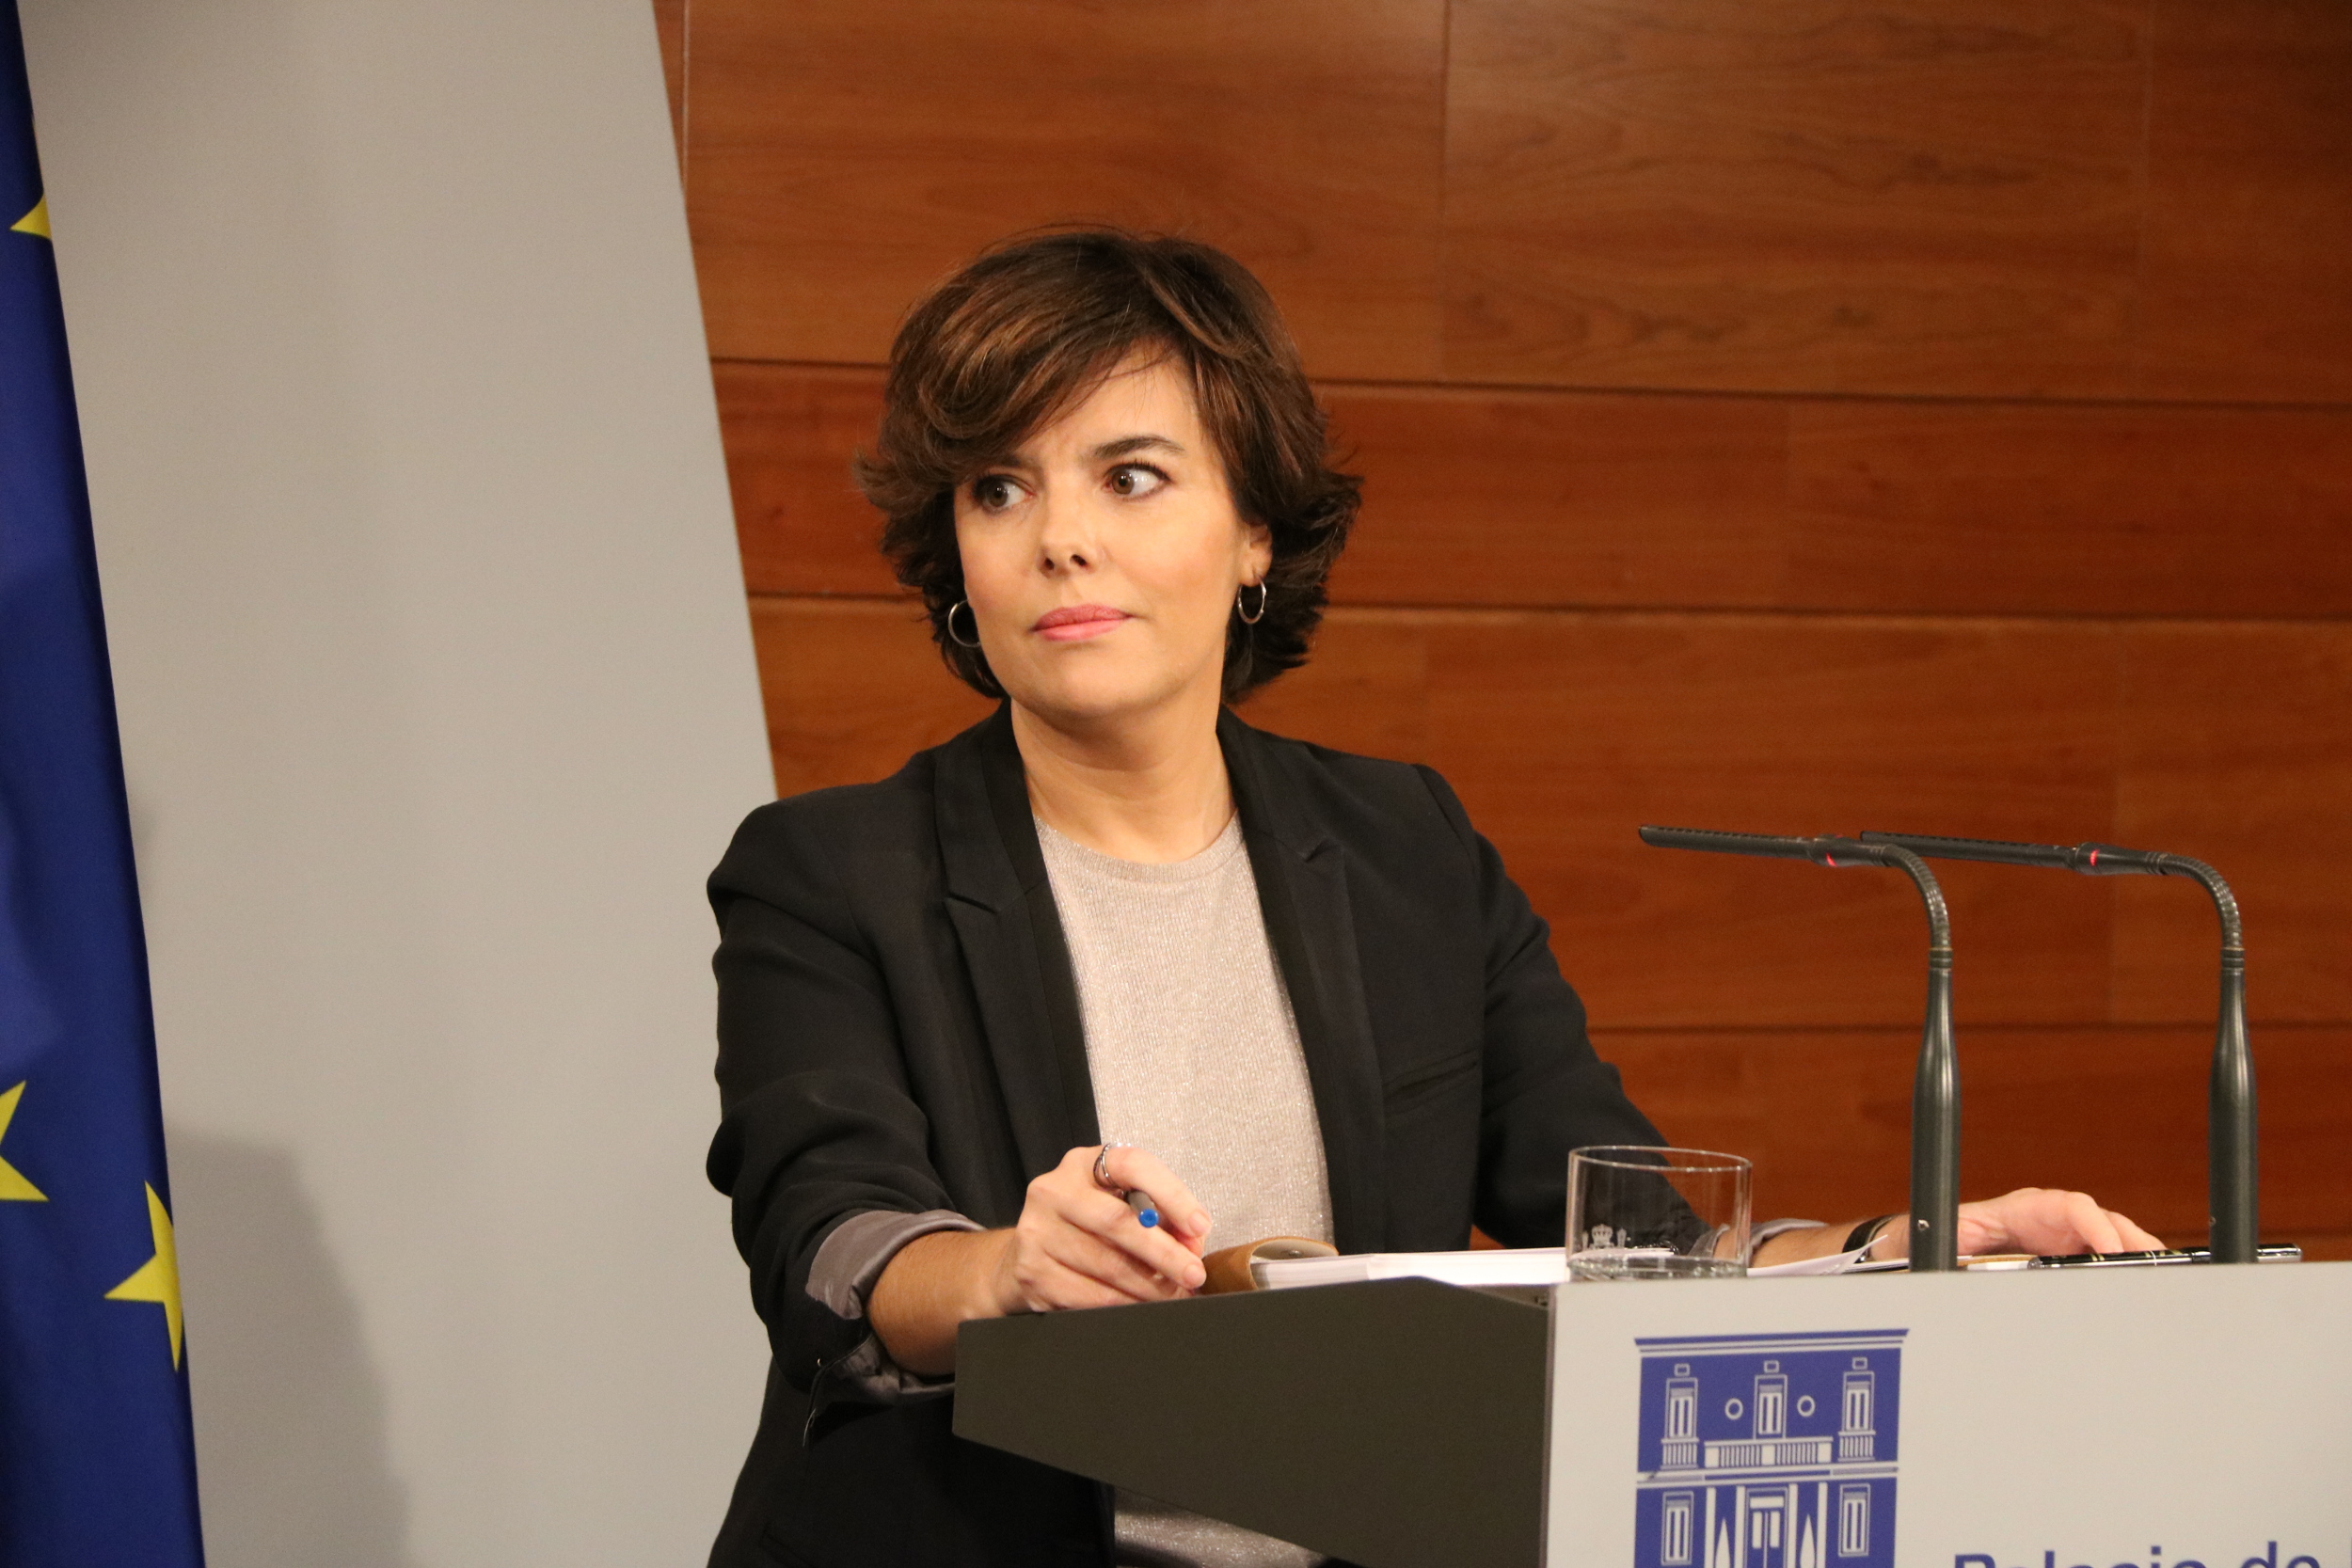 The Spanish vice president, Soraya Sáenz de Santamaría